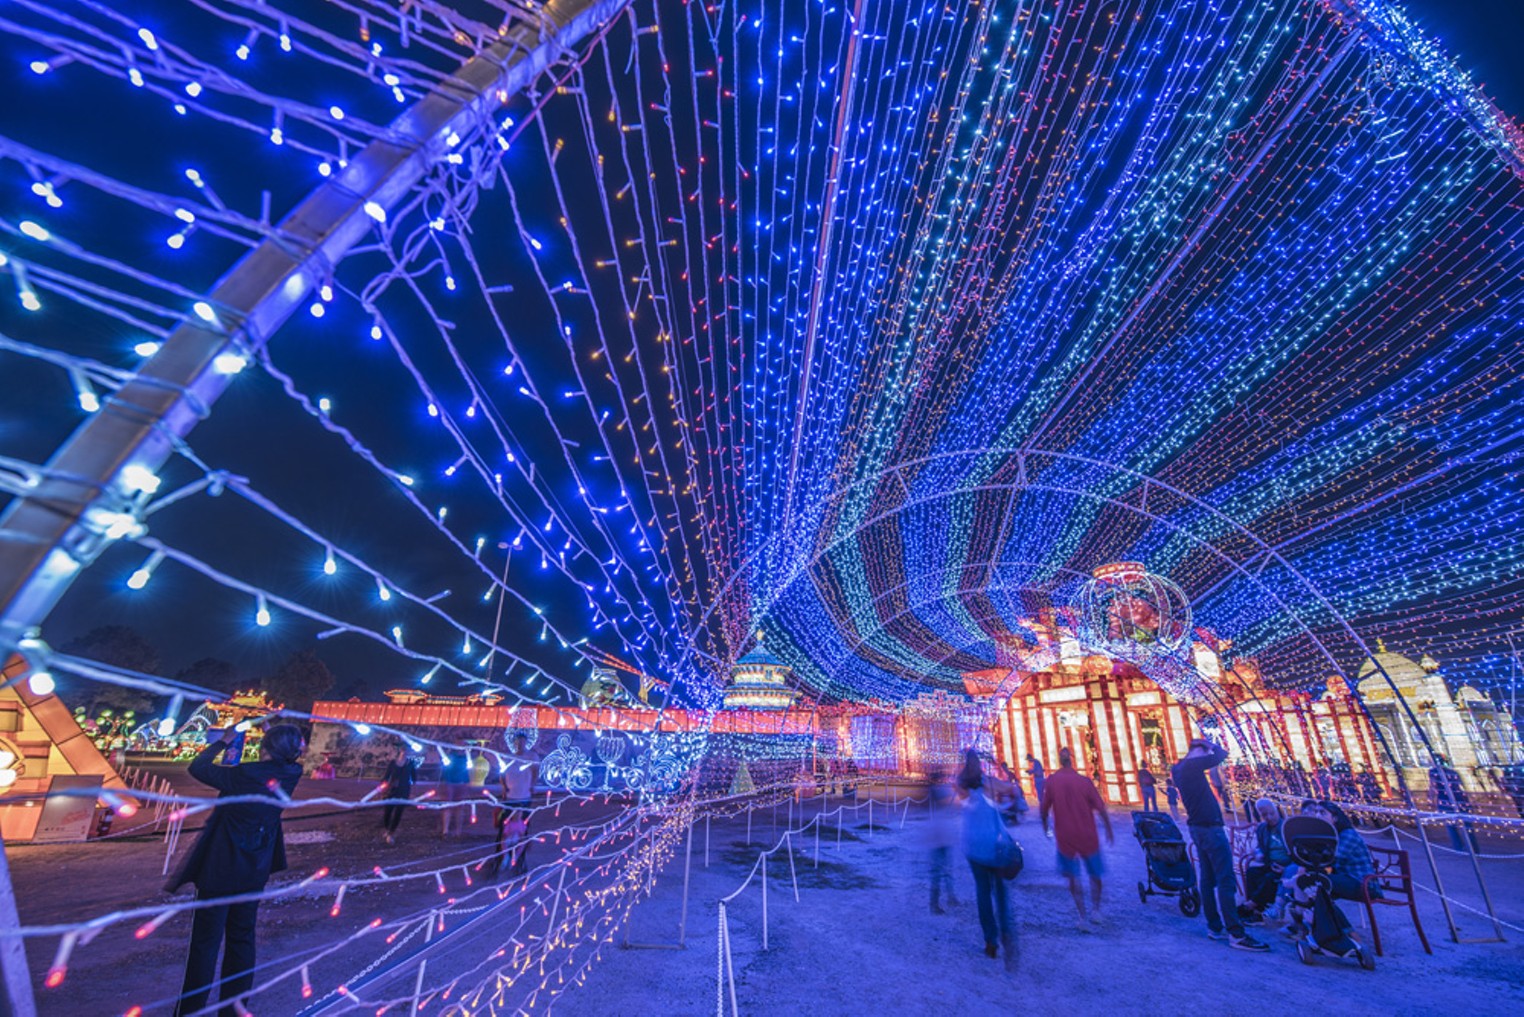 magical winter lights houston 2020